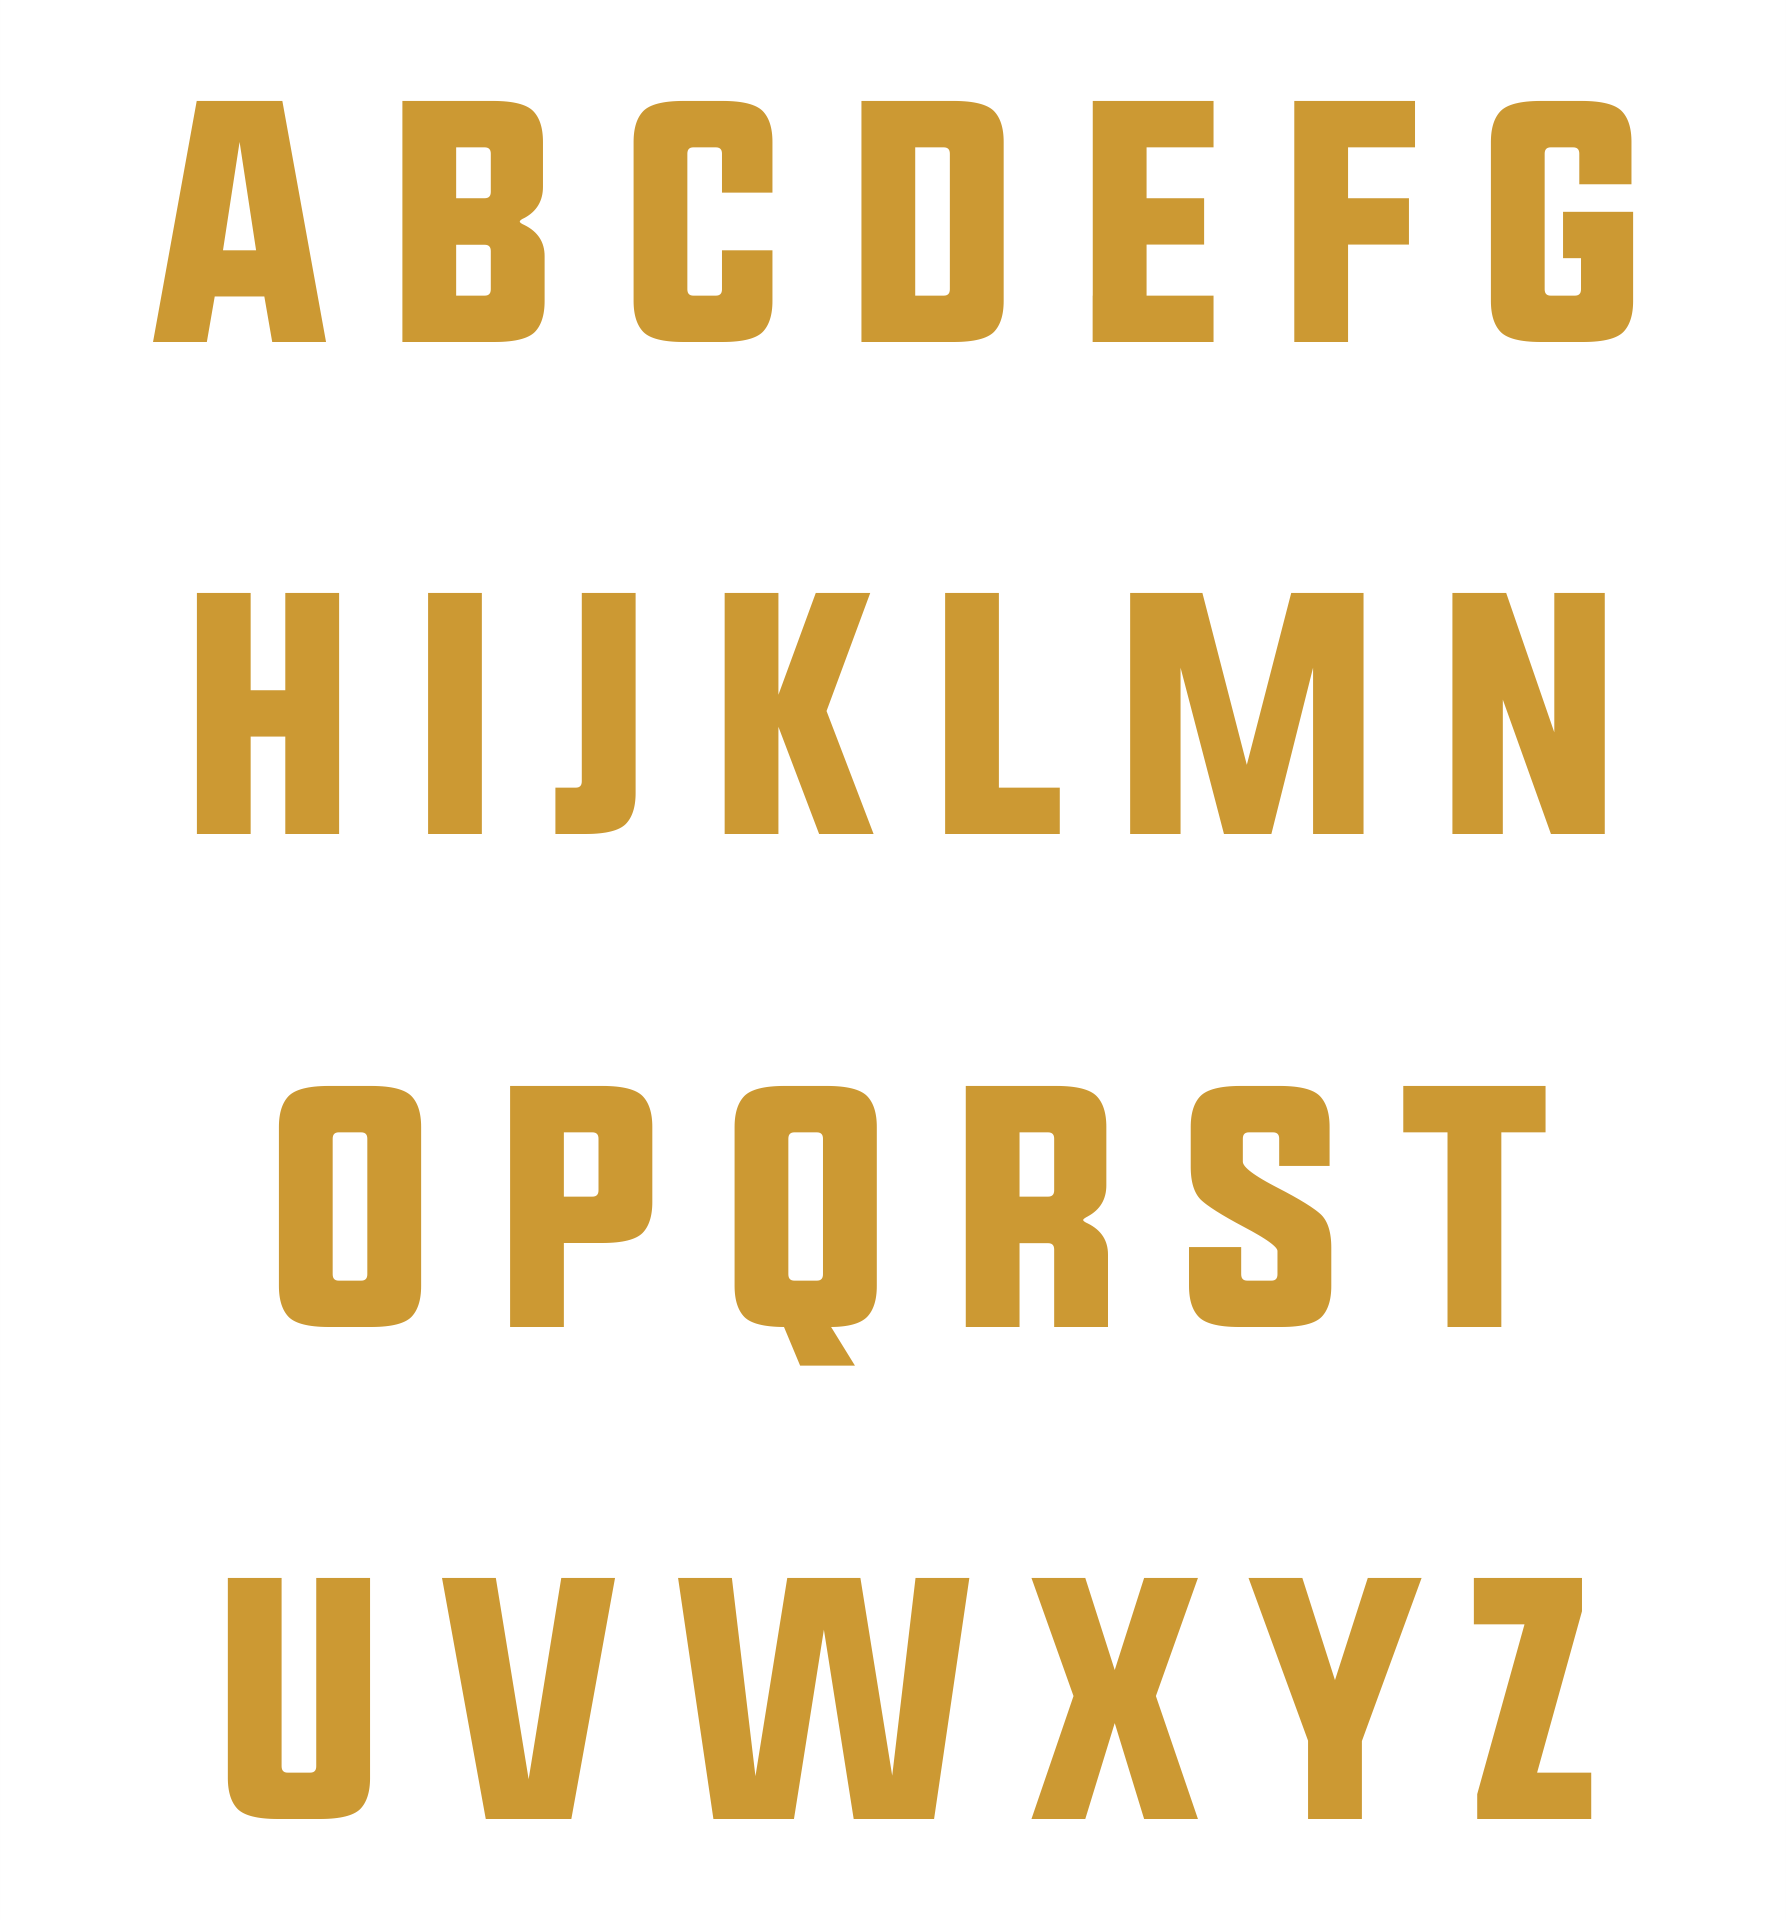 fancy-letter-free-printable-alphabet-stencils-template-printable